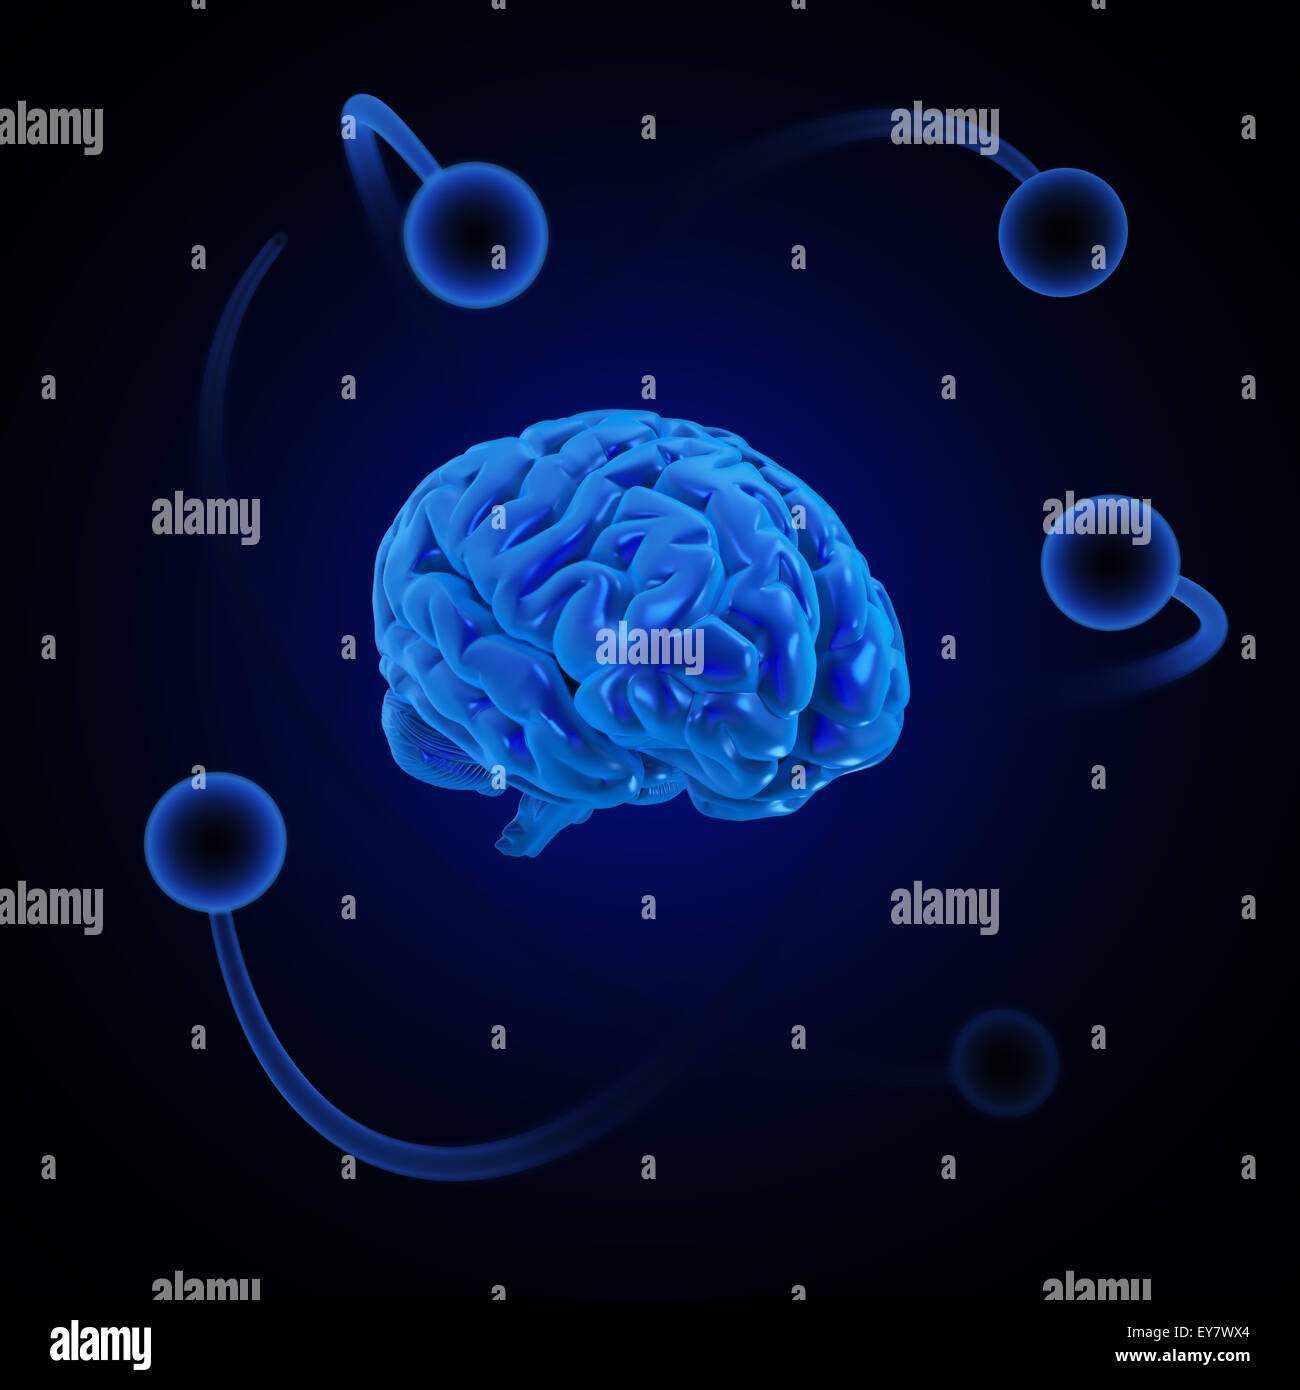 Brain nucleus - creativity concept illustration Stock Photo